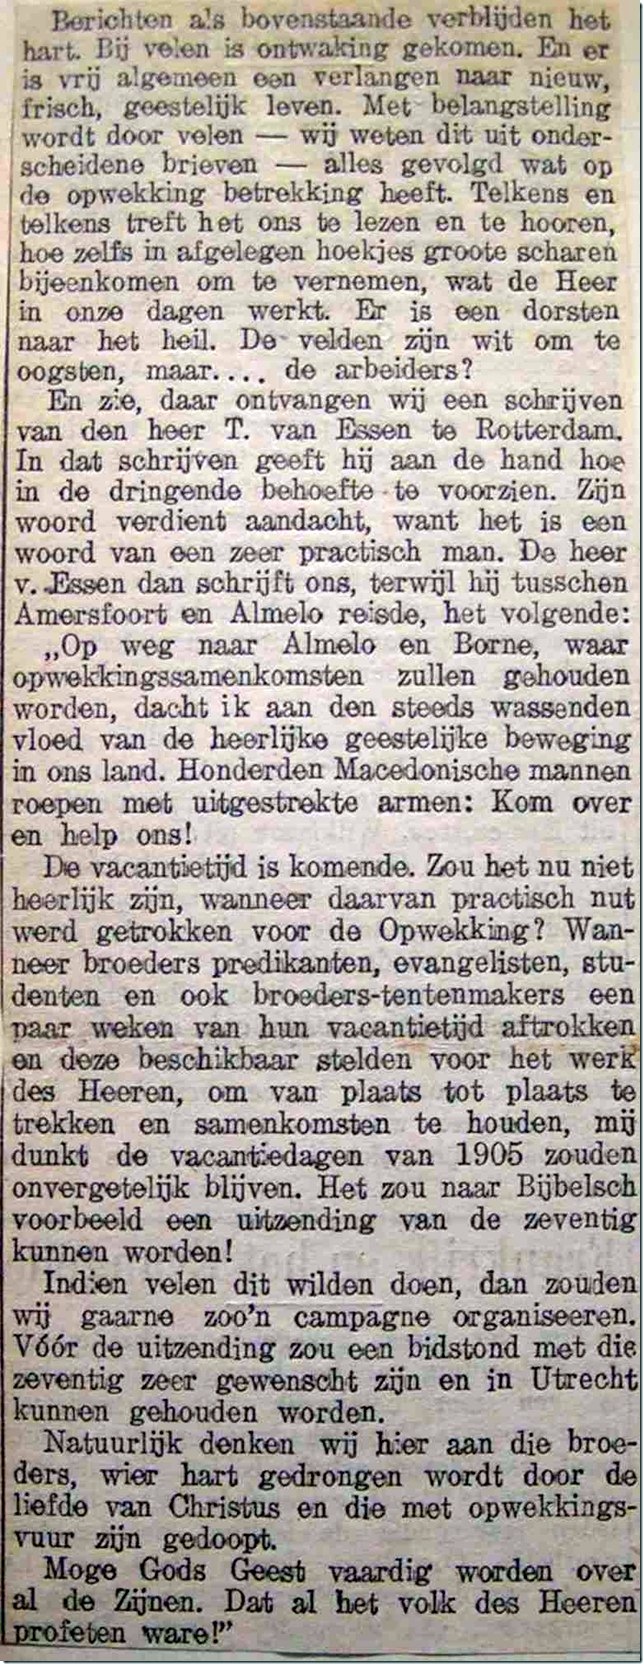 b-012-26-juni-1905-j-nederland-opwekking